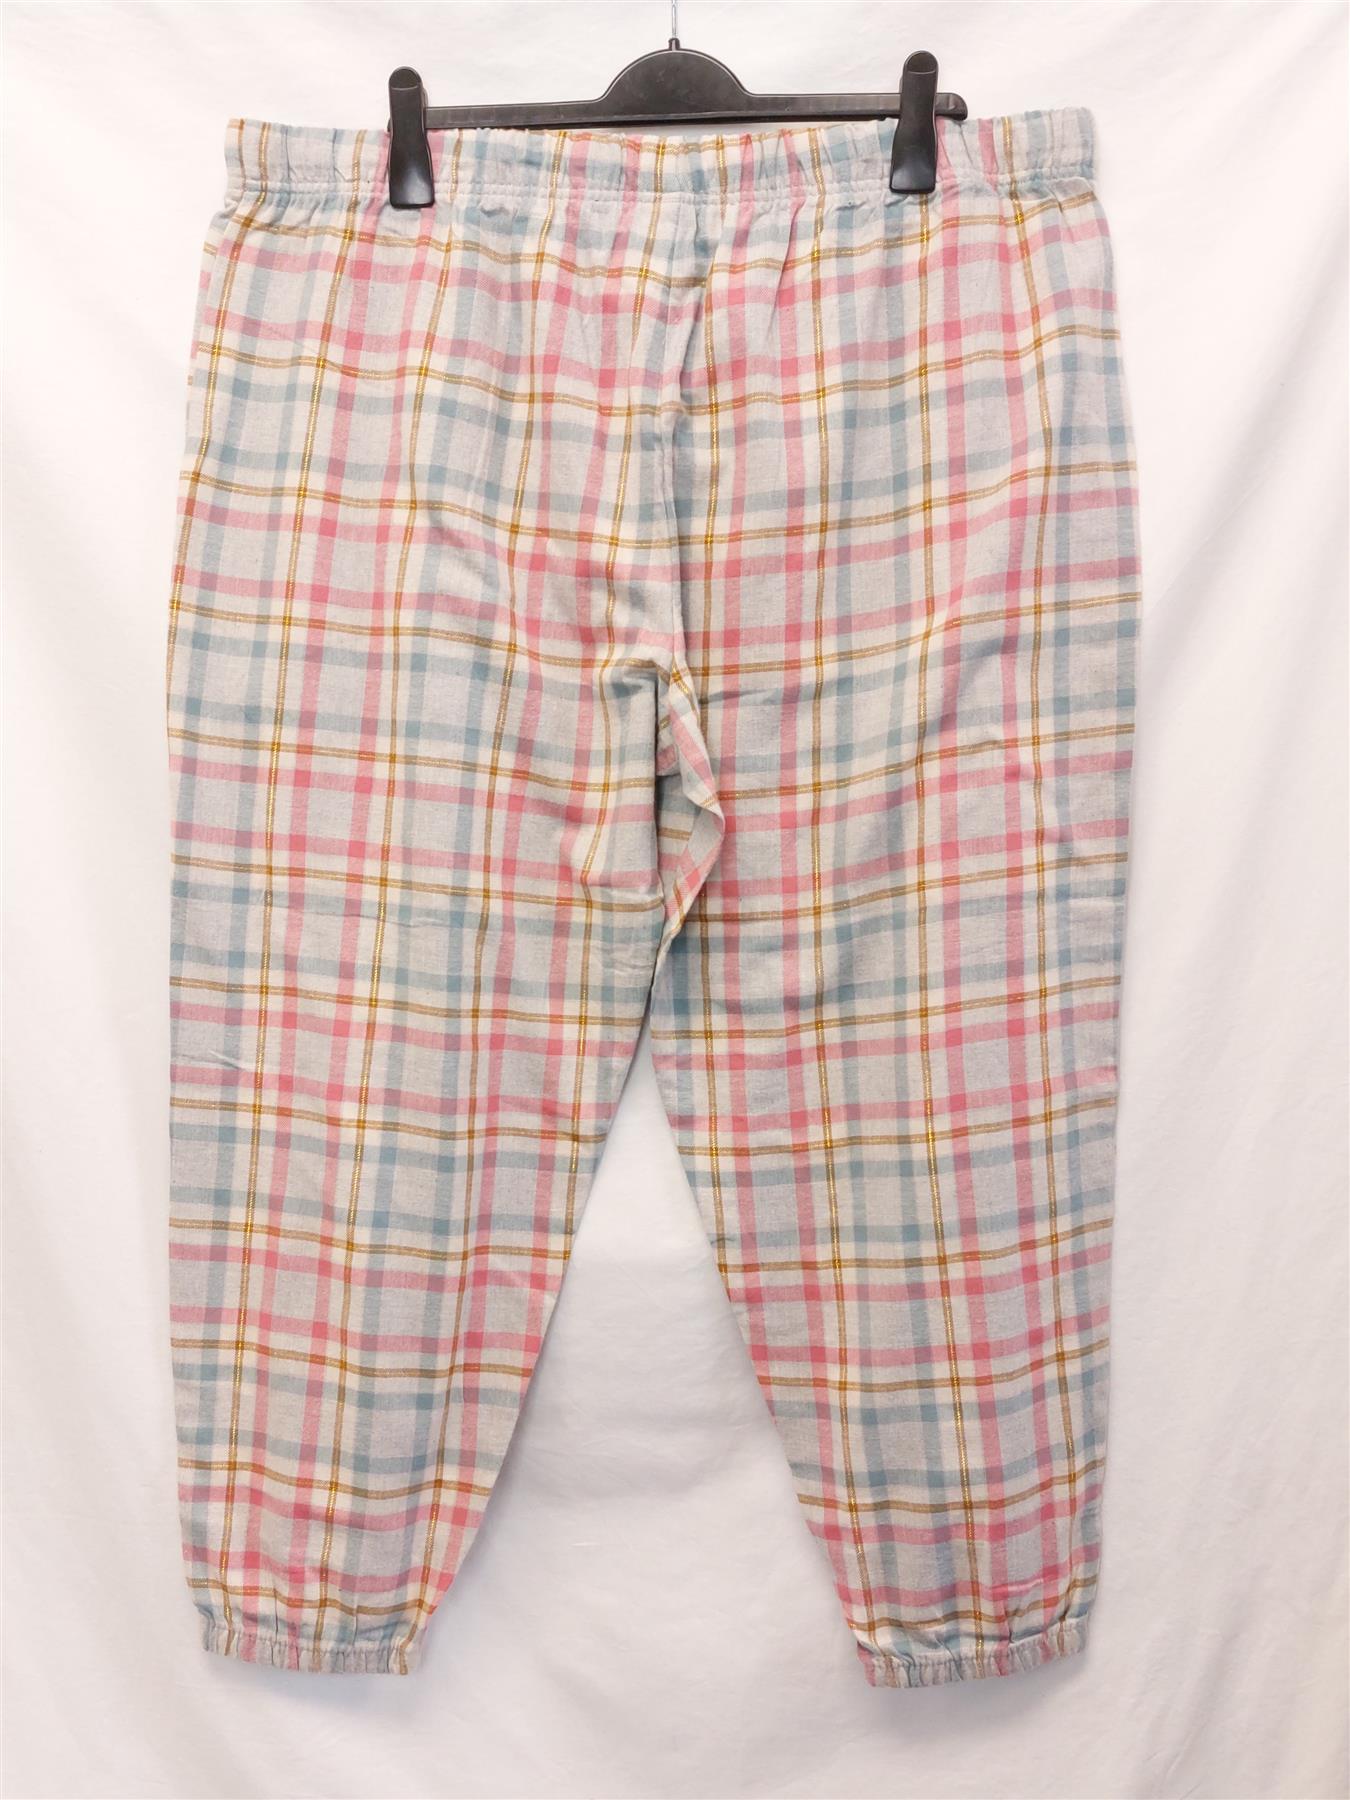 Women's Pyjama Bottoms Cotton Check Printed Cuffed Comfy Warm Size 22 Pink